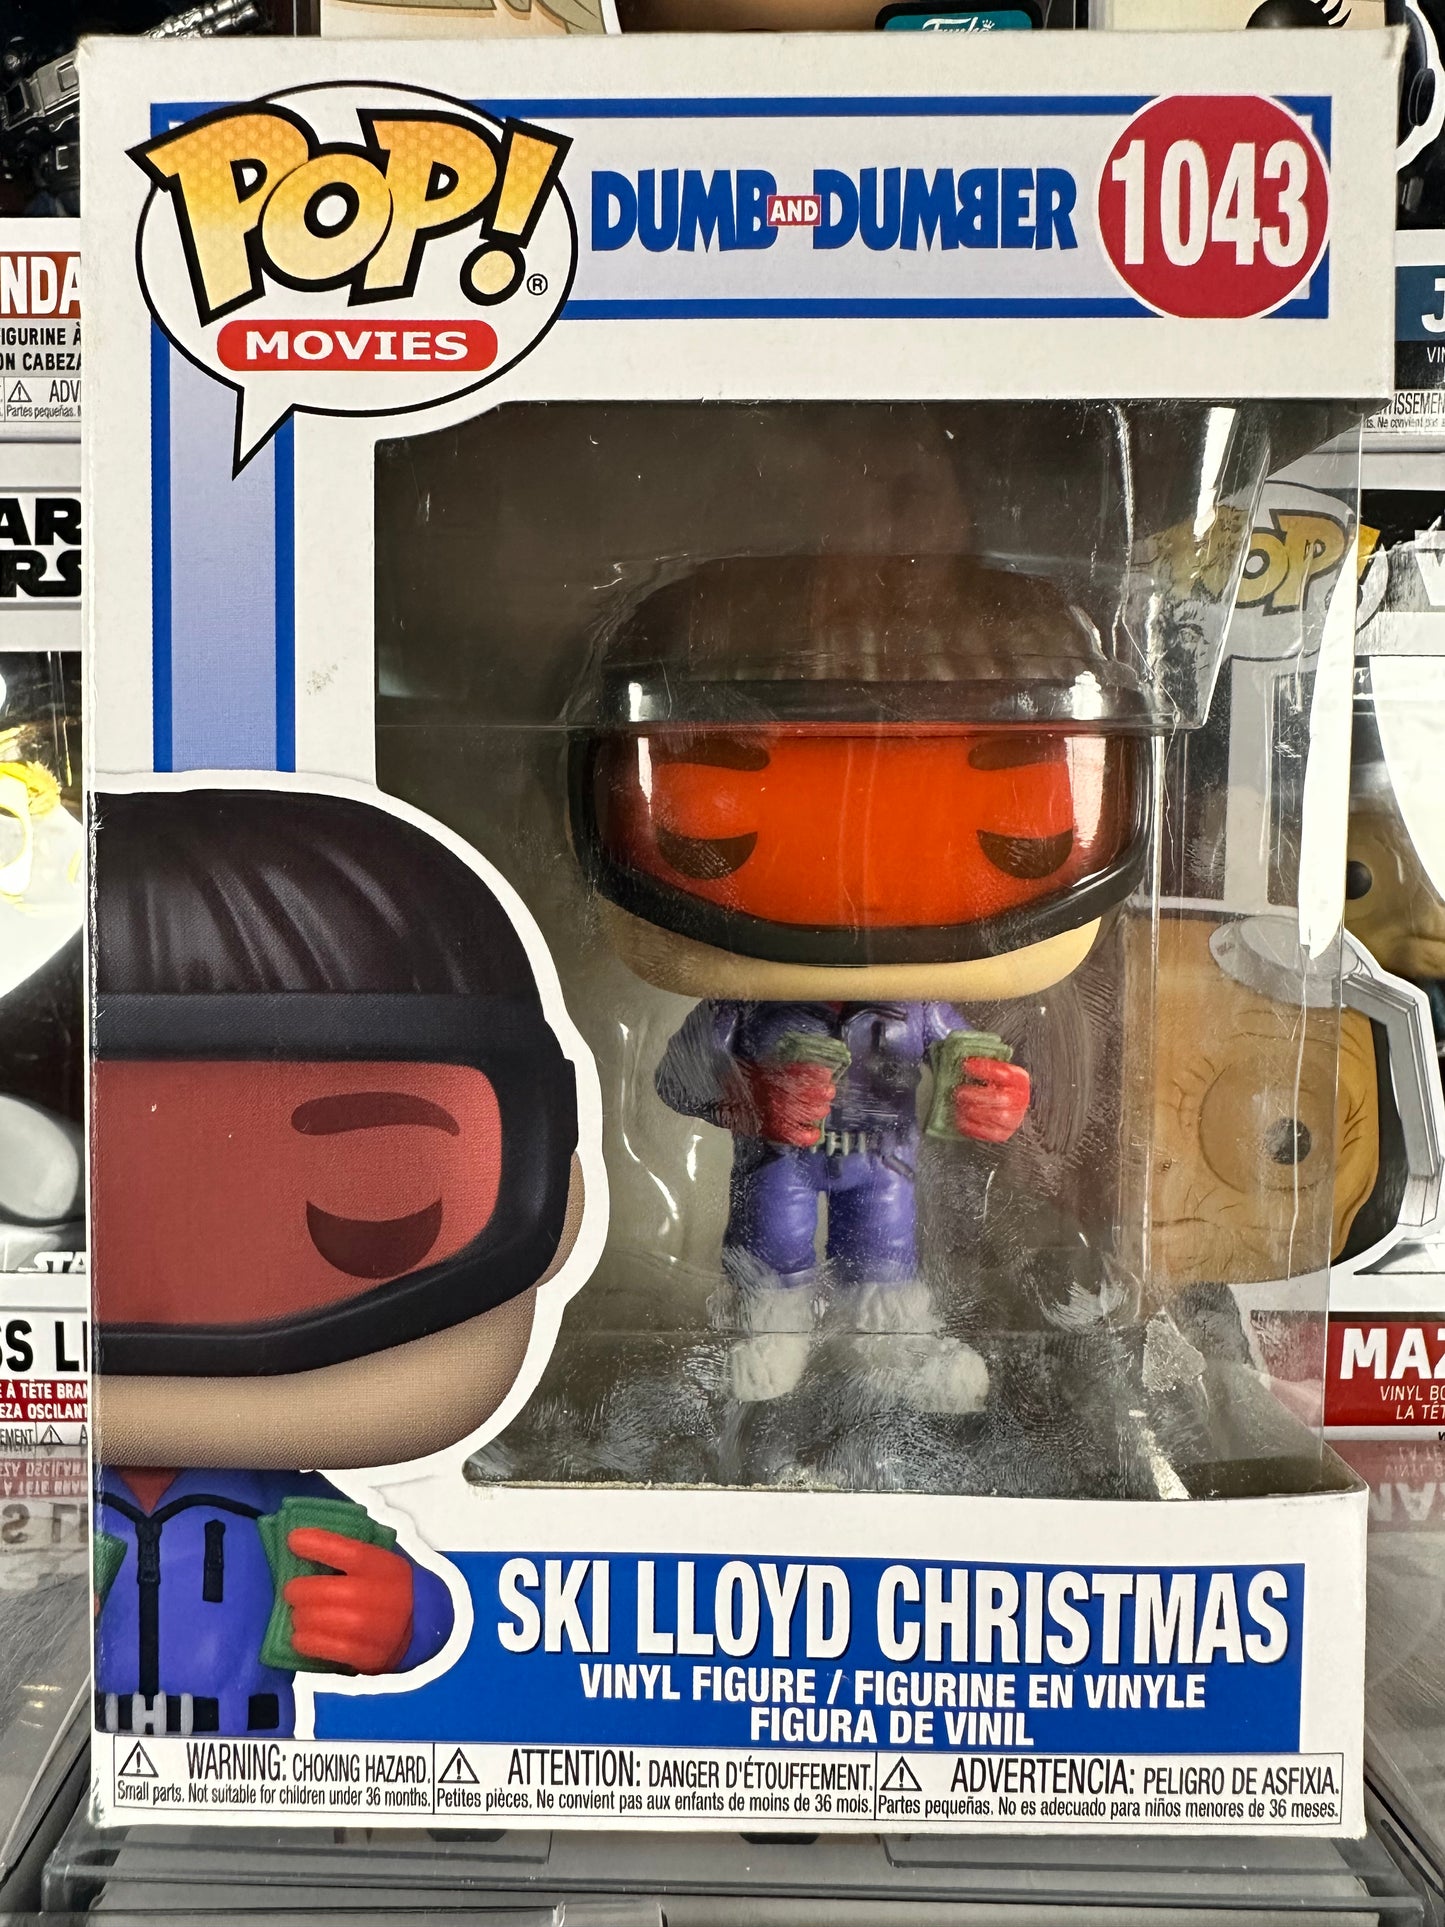 Dumb and Dumber - Ski Lloyd Christmas (1043)